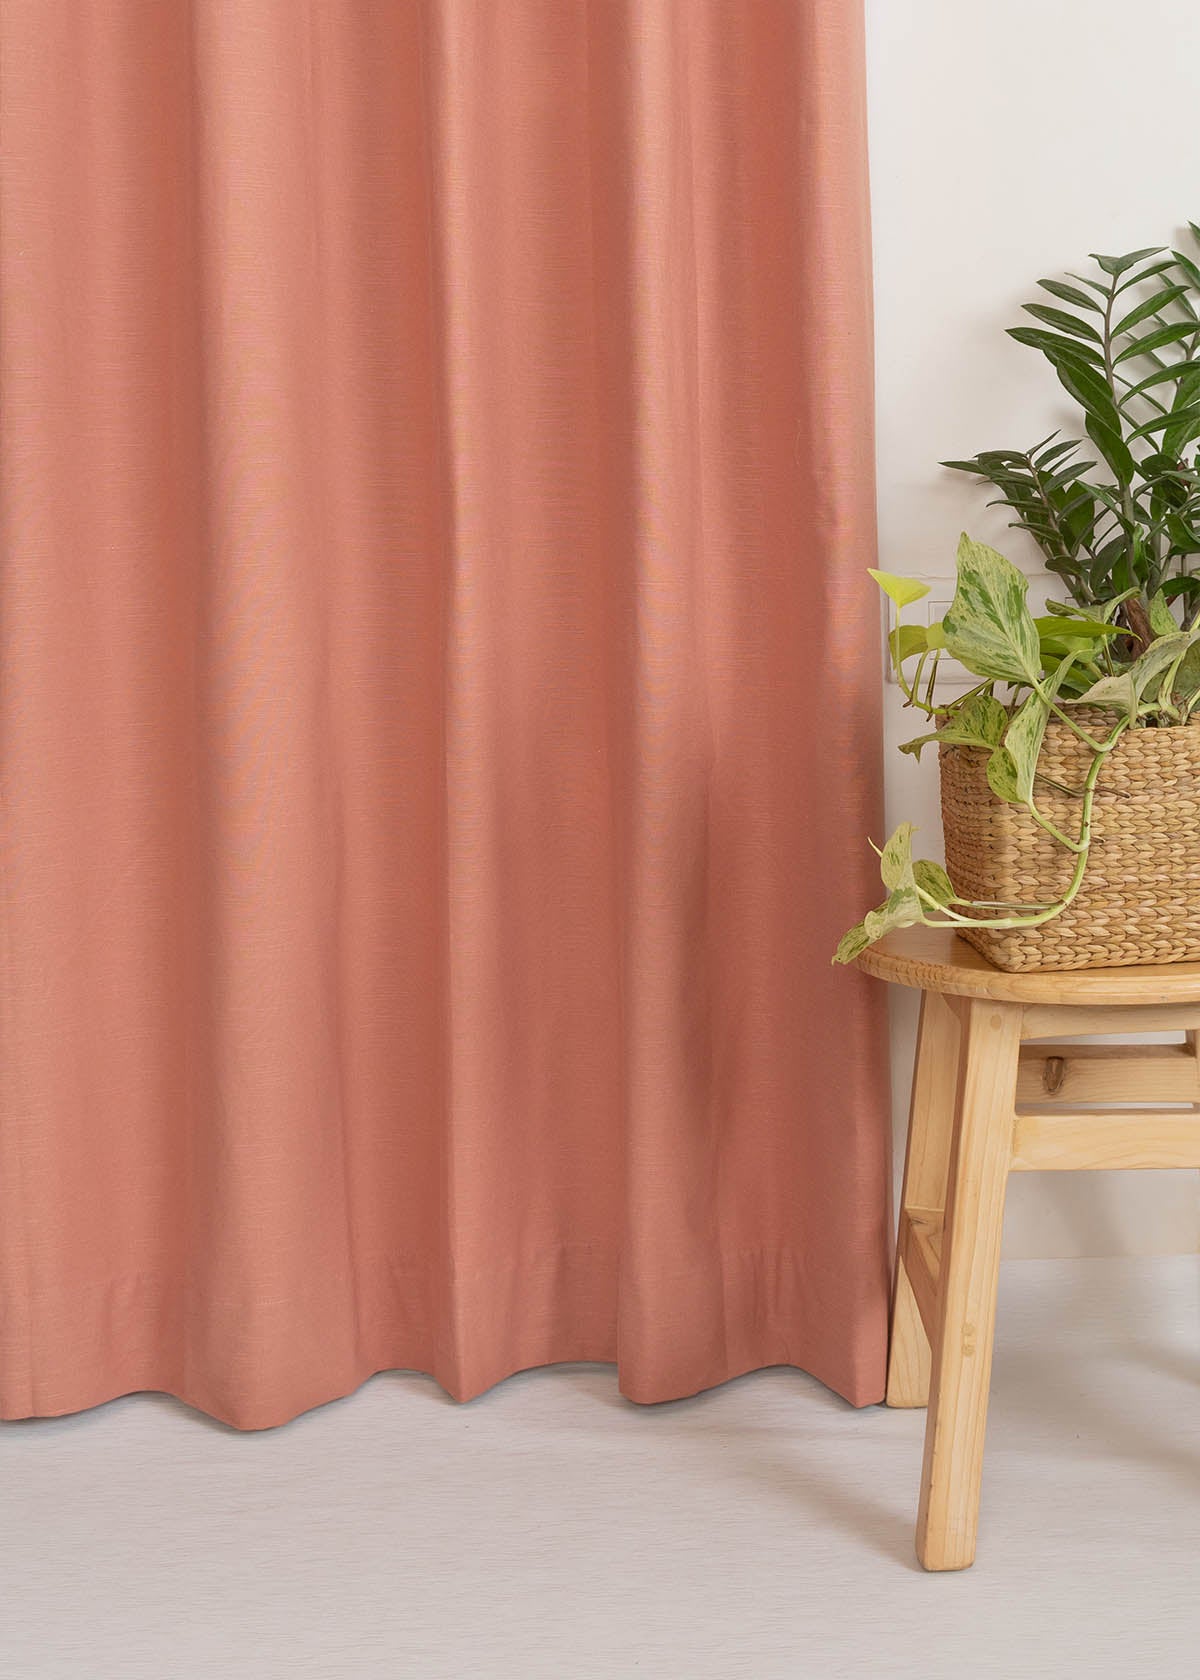 Solid Rust 100% Customizable Cotton plain curtain for bedroom - Room darkening